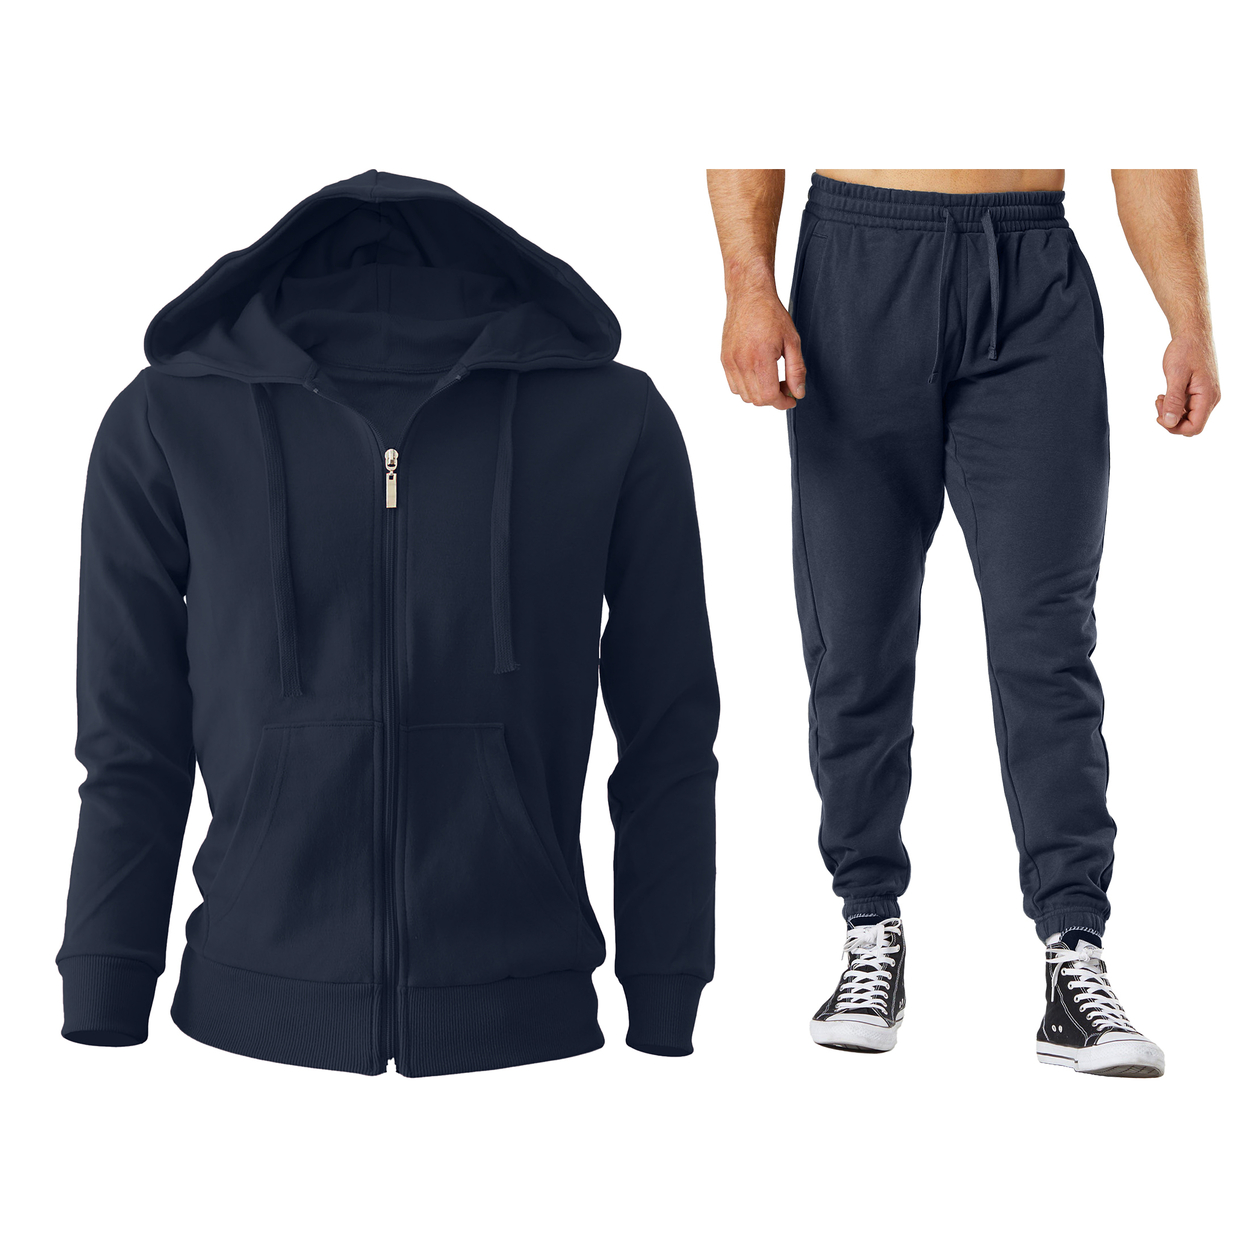 4-Piece: Men's Winter Warm Cozy Athletic Multi-Pockets BIG & TALL Sweatsuit Set - Charcoal, X-large